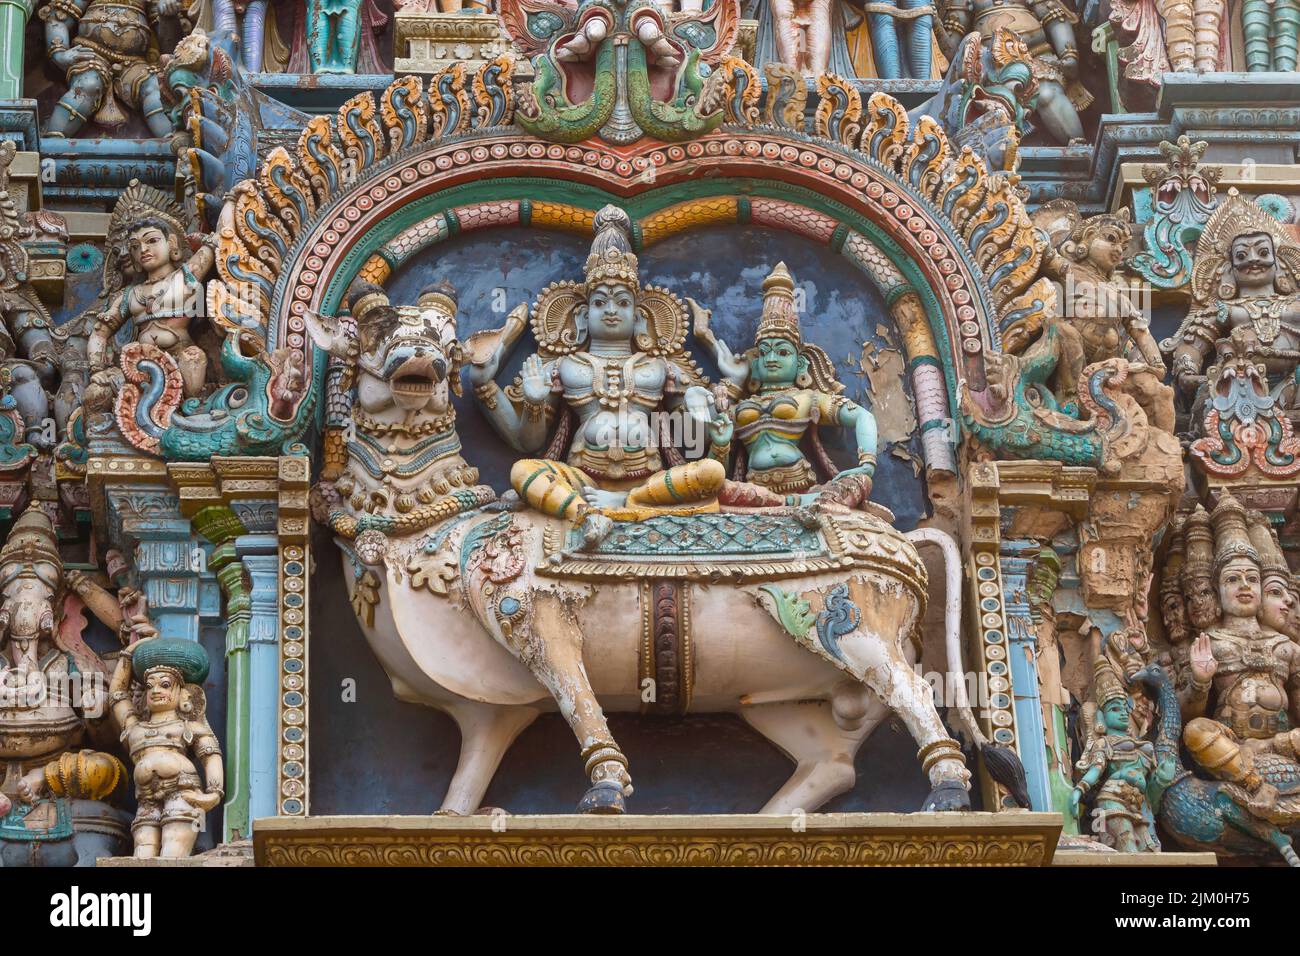 Escultura del Señor Shiva y Parvati sentado en Nandi {toro}, en Meenakshi Amman Temple Gopuram, Madurai, Tamilnadu, India. Foto de stock